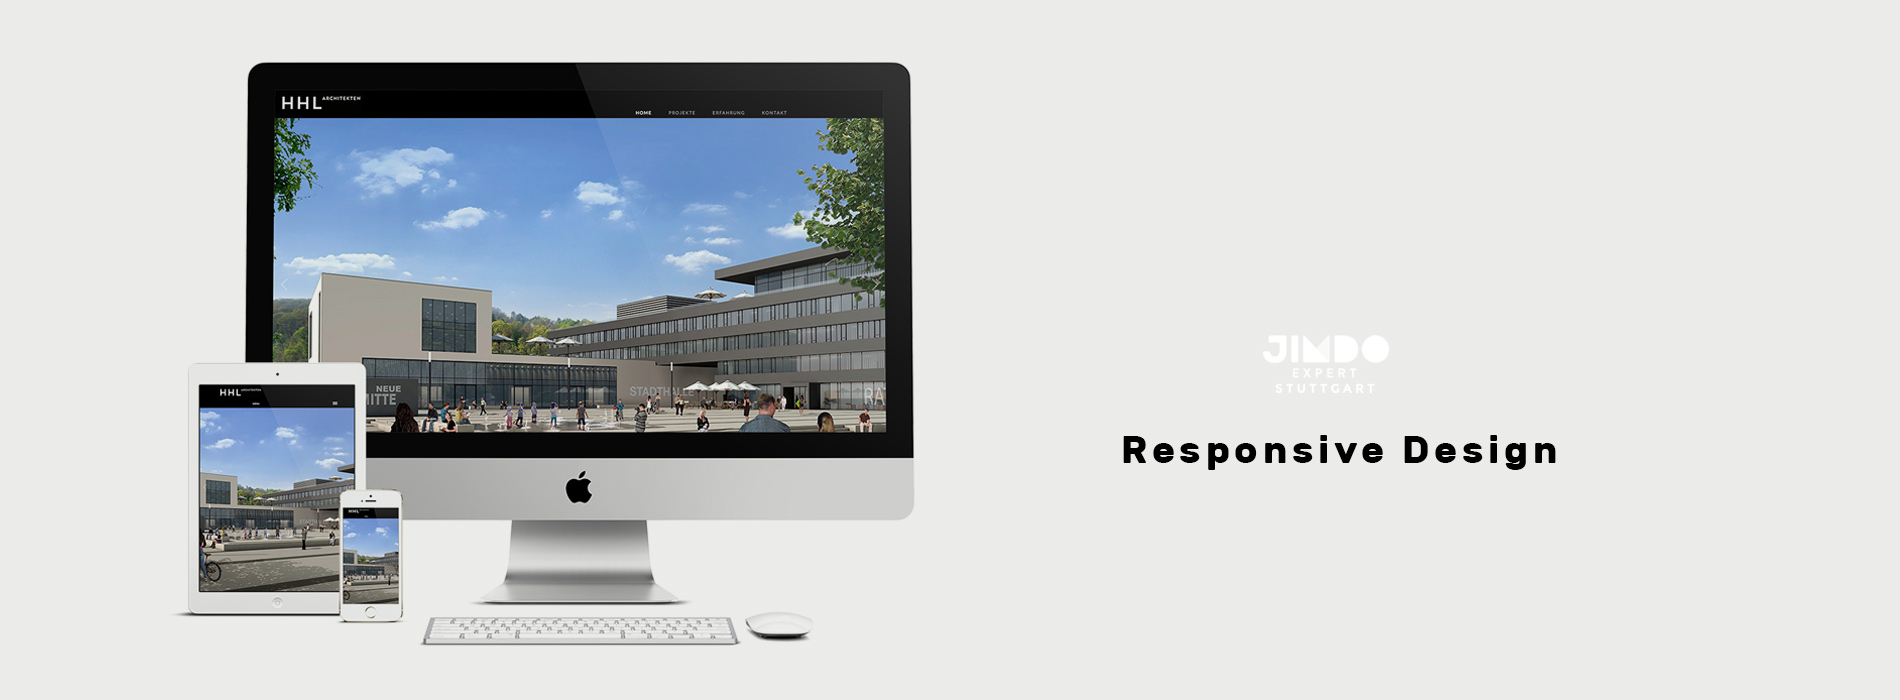 Jimdo Expert Stuttgart - Responsive Design, Responsive Webdesign - Peter Scheerer